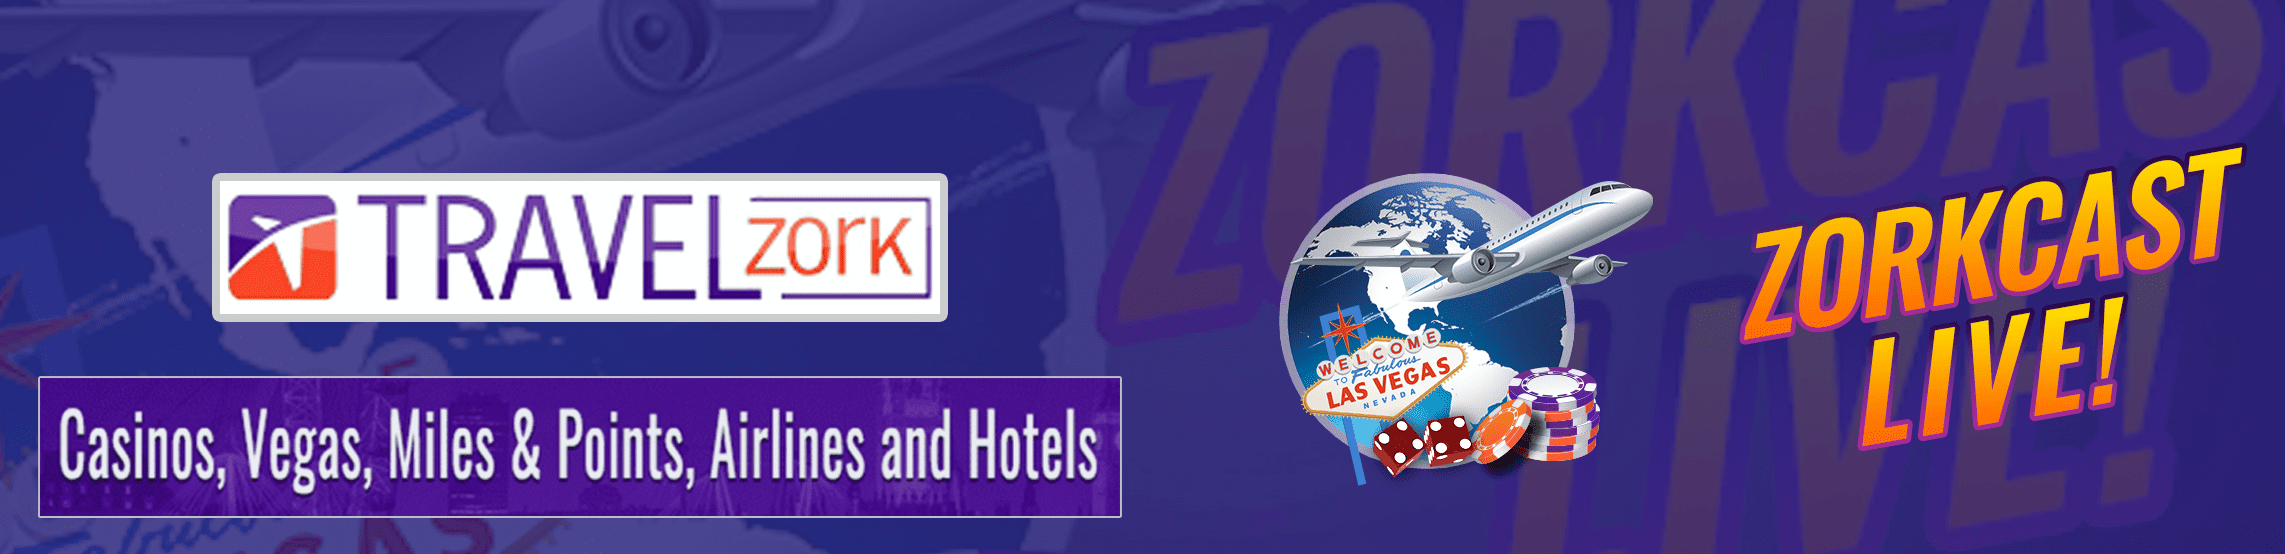 ZorkCast Live YouTube. powered by TravelZork